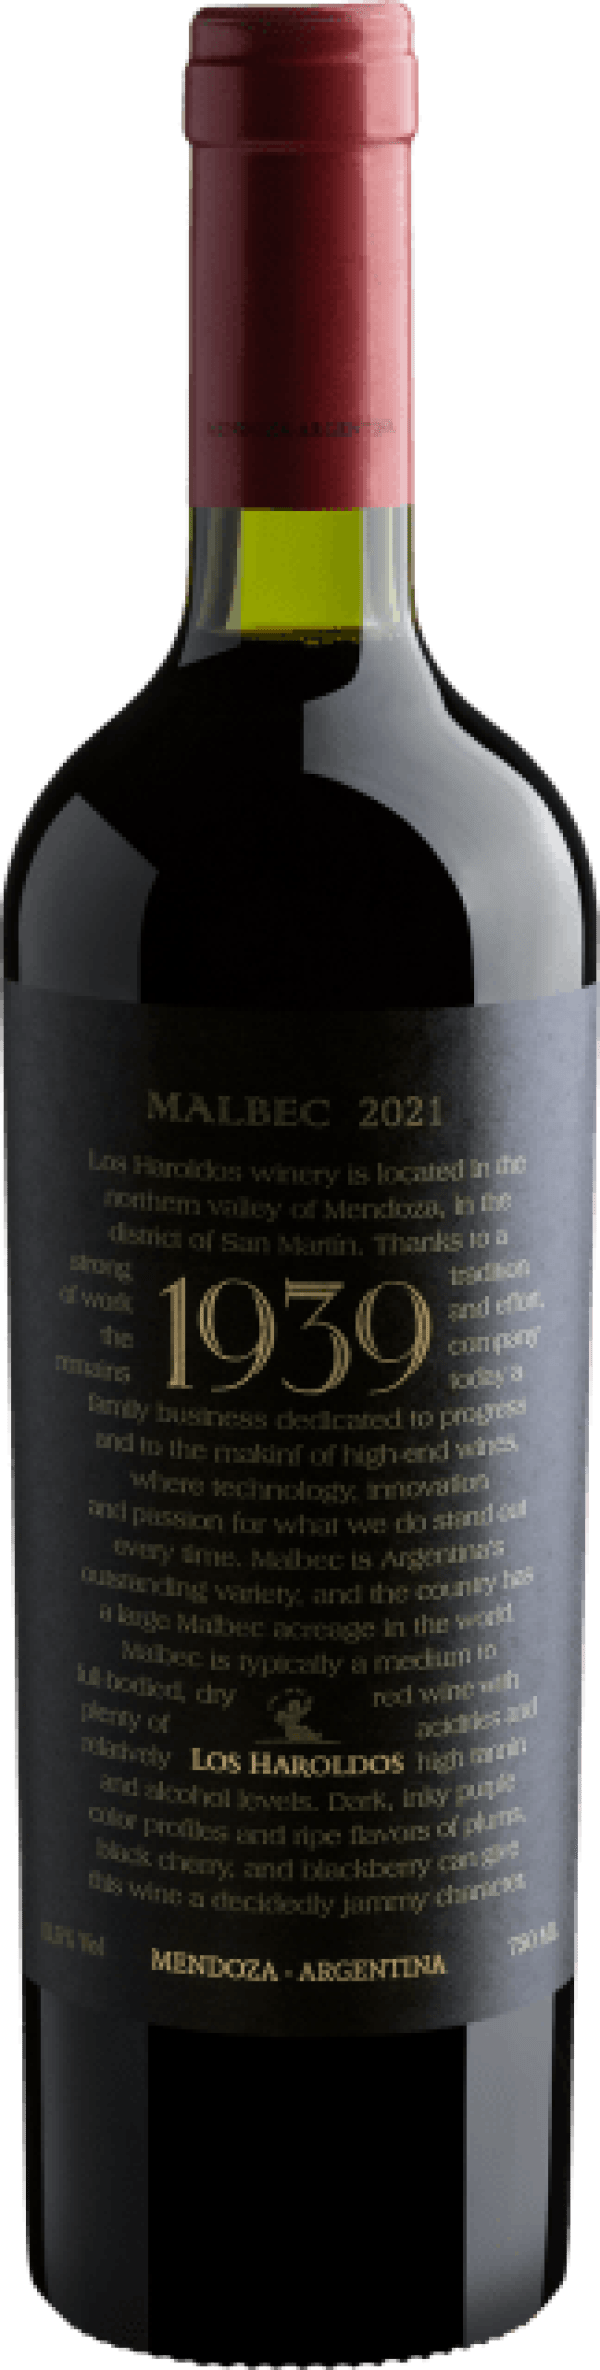 1939 Malbec 2021